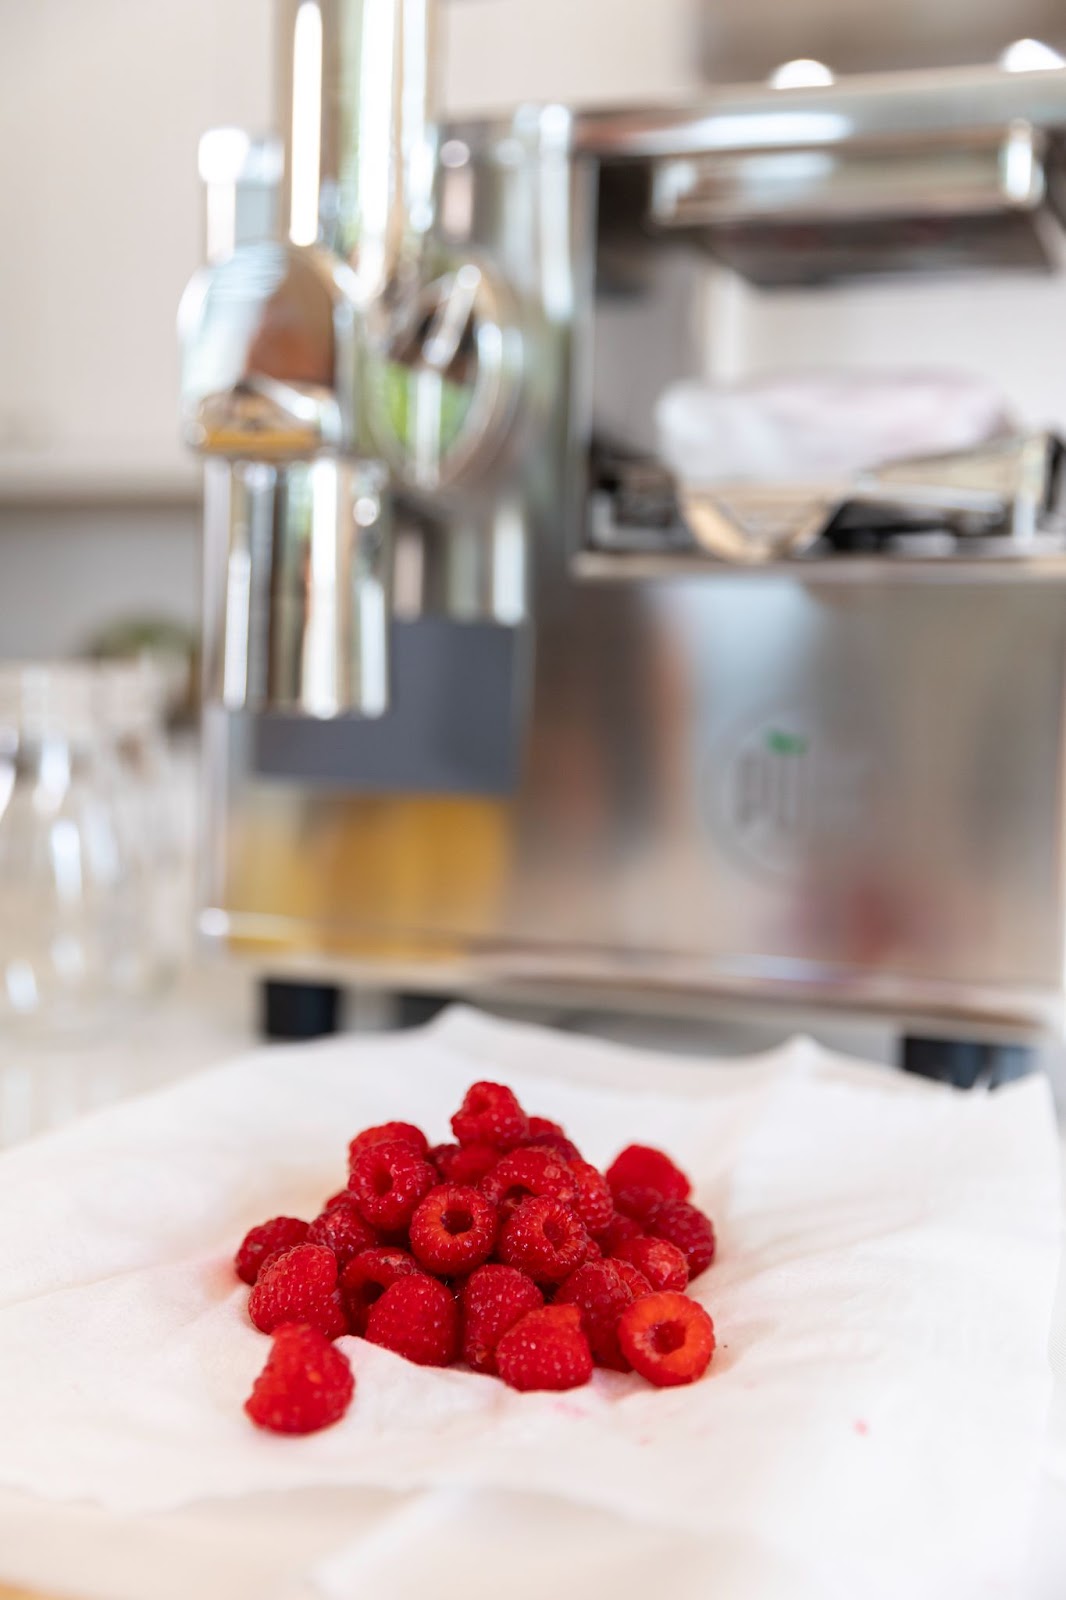 raspberries in front of pure juicer